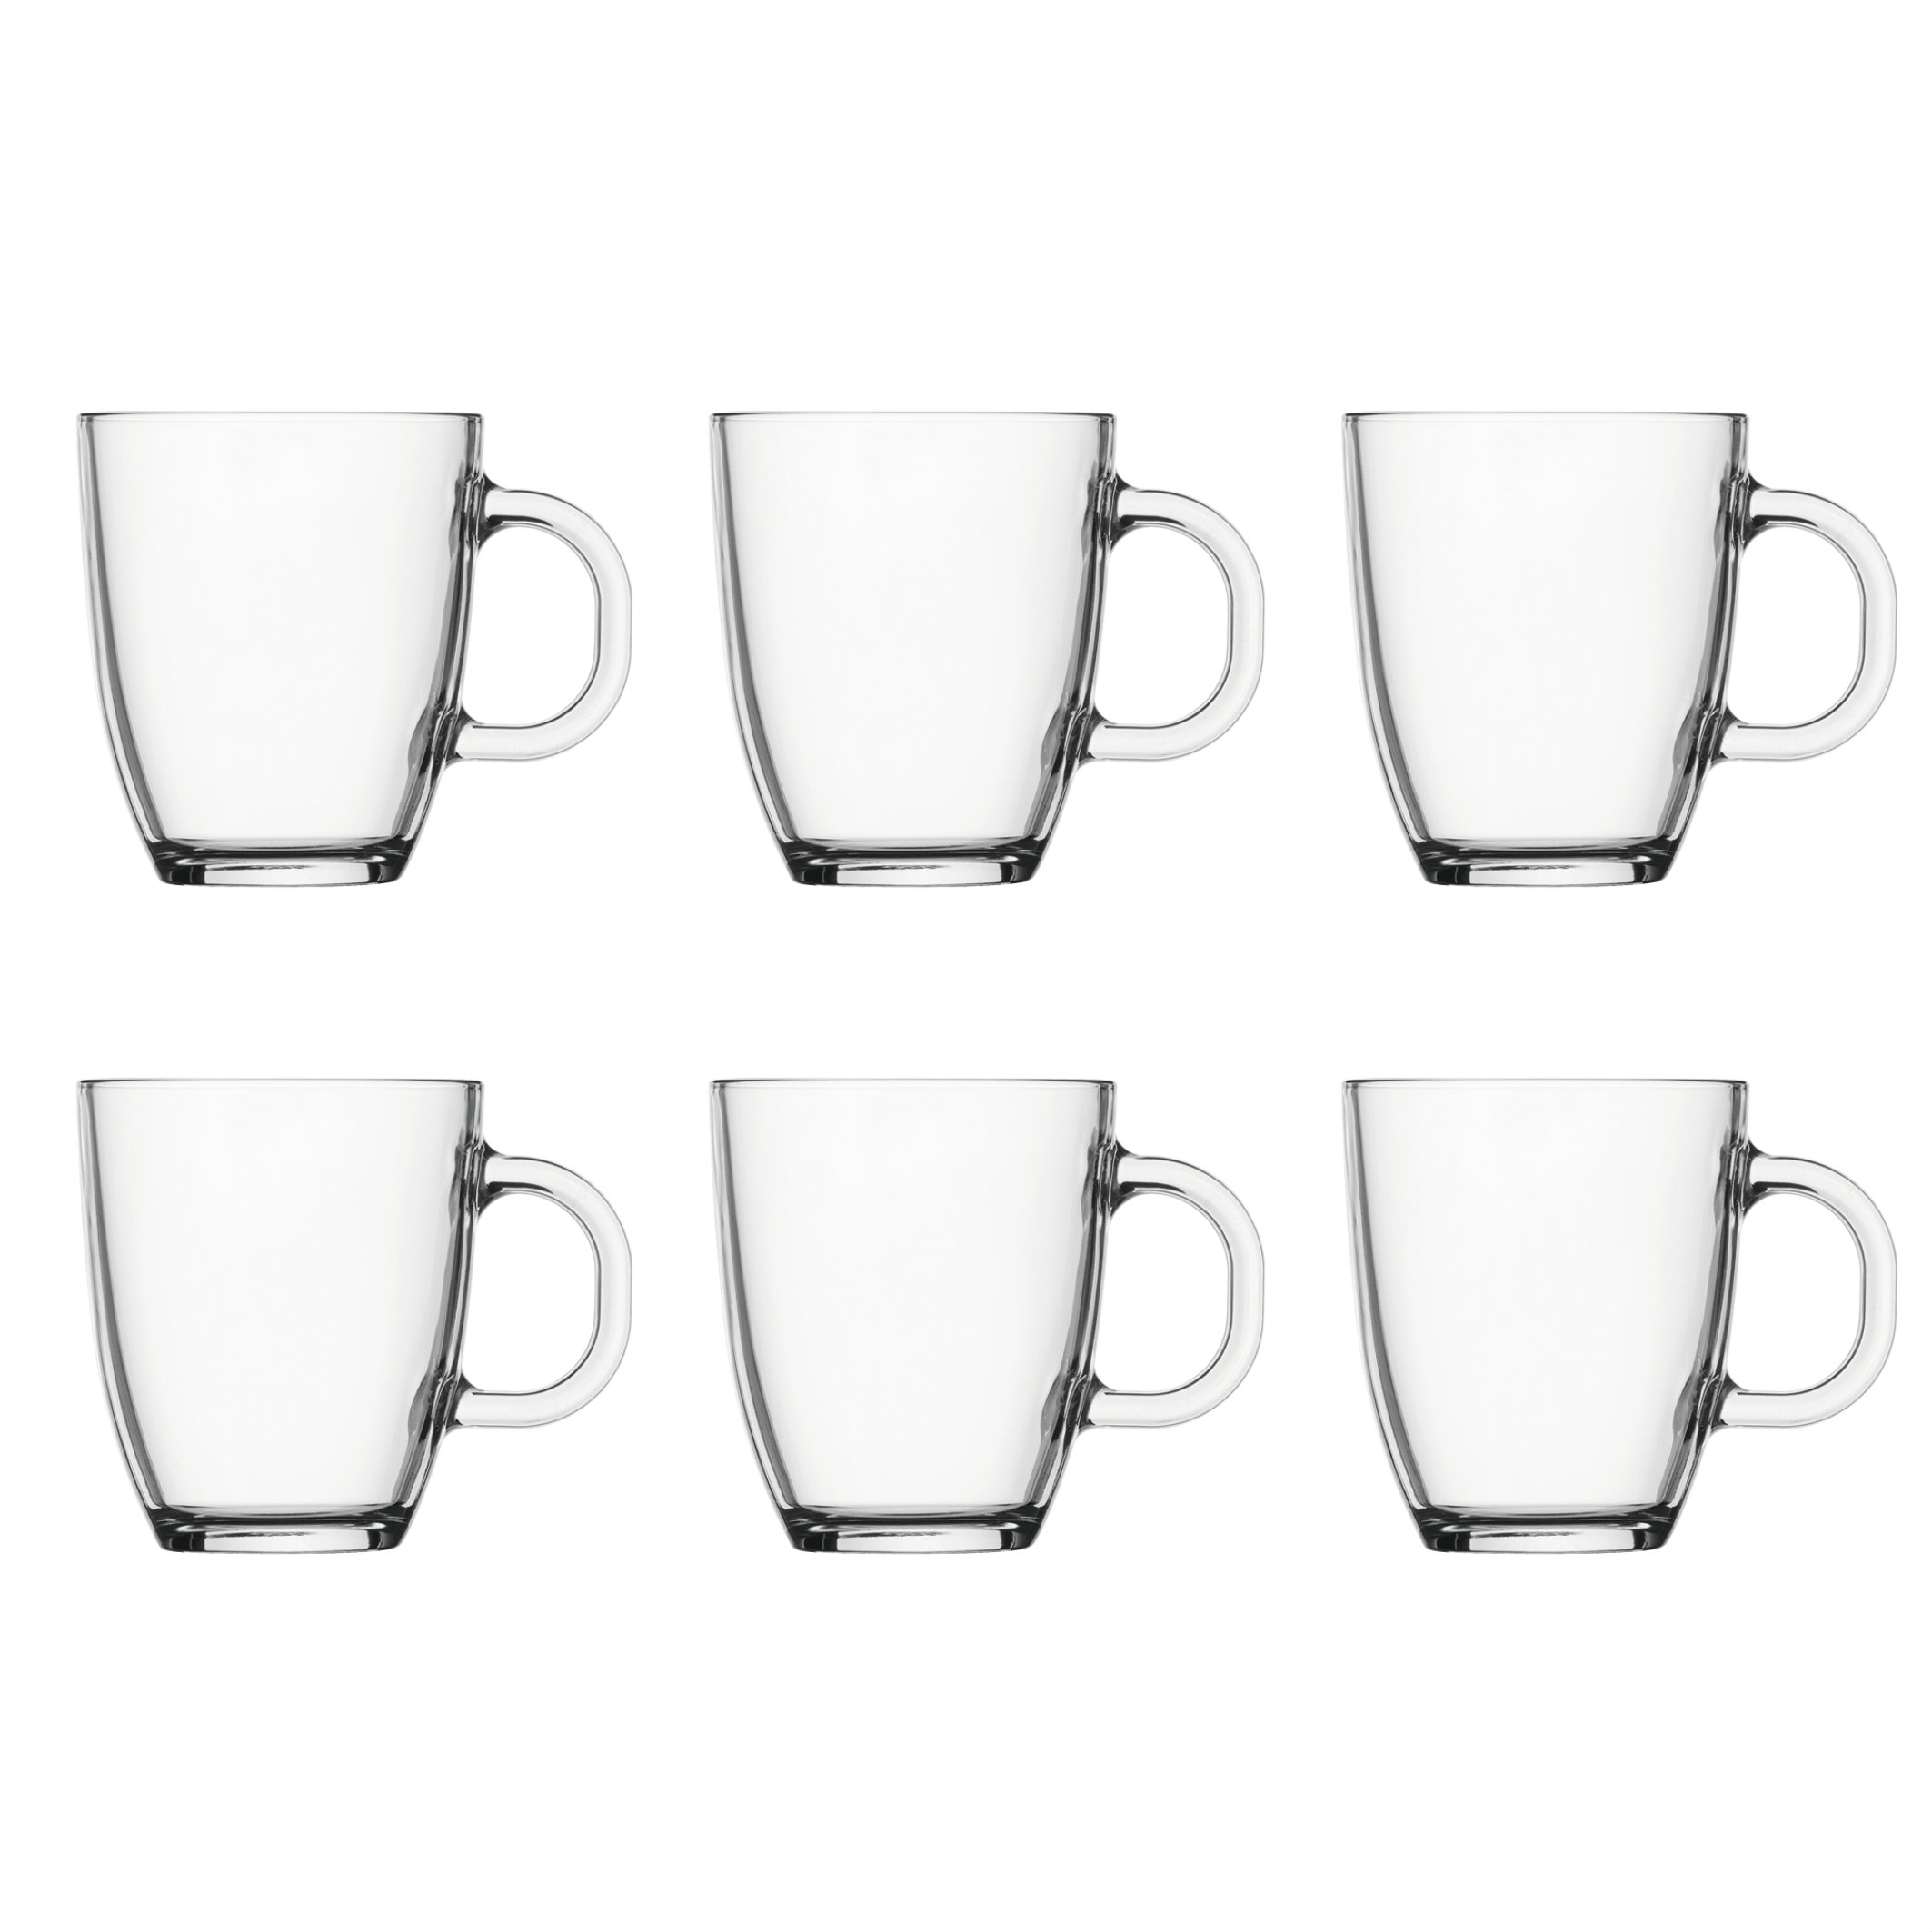 Bodum Bistro Double Wall Coffee Mug Set - 10oz